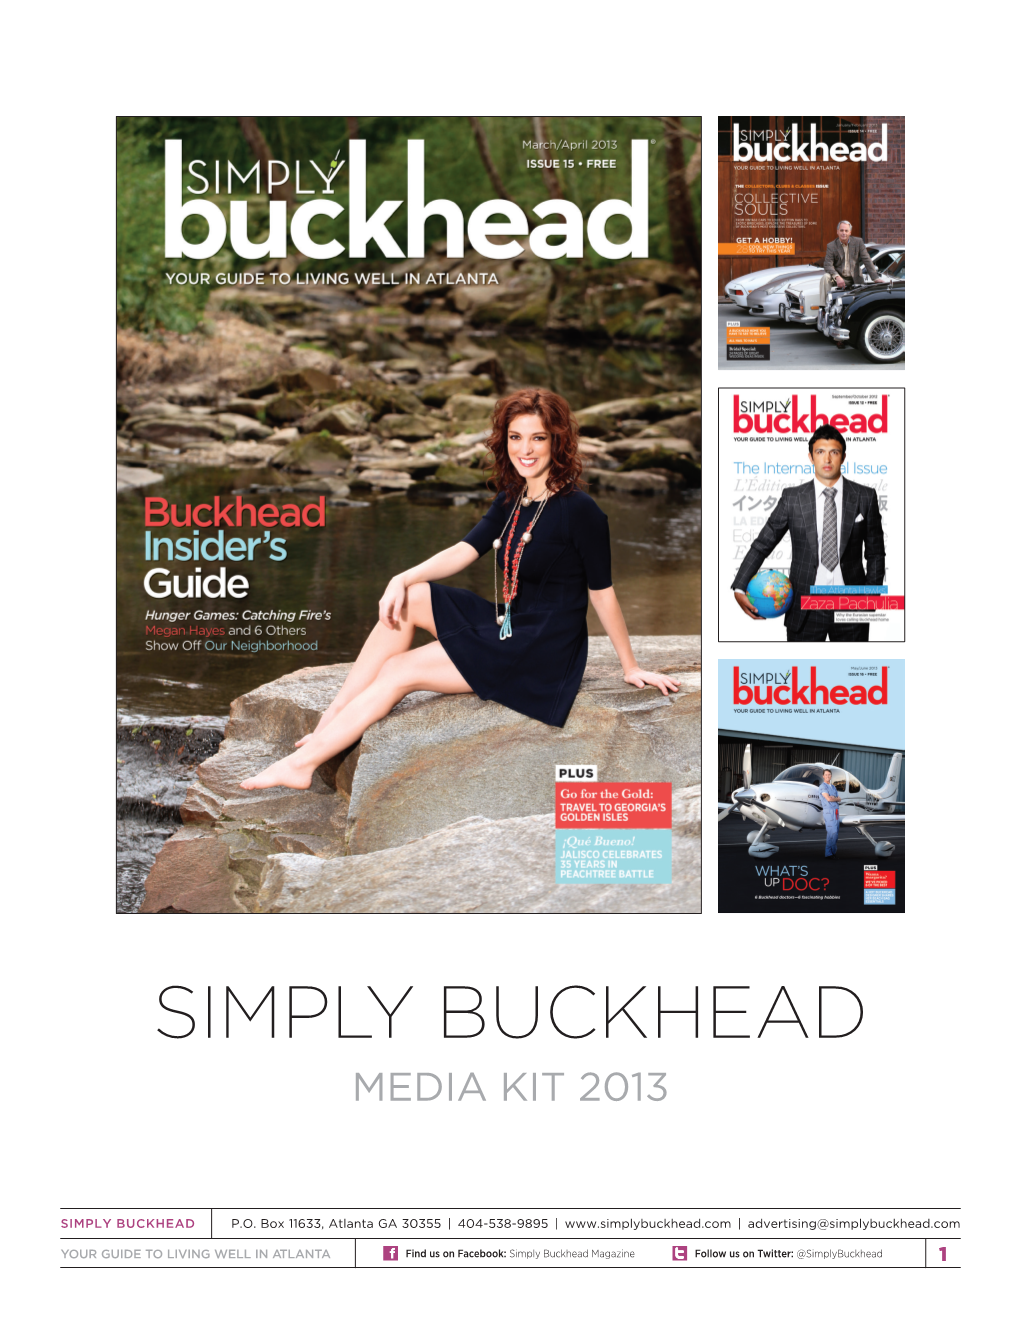 Simply Buckhead Media Kit 2013